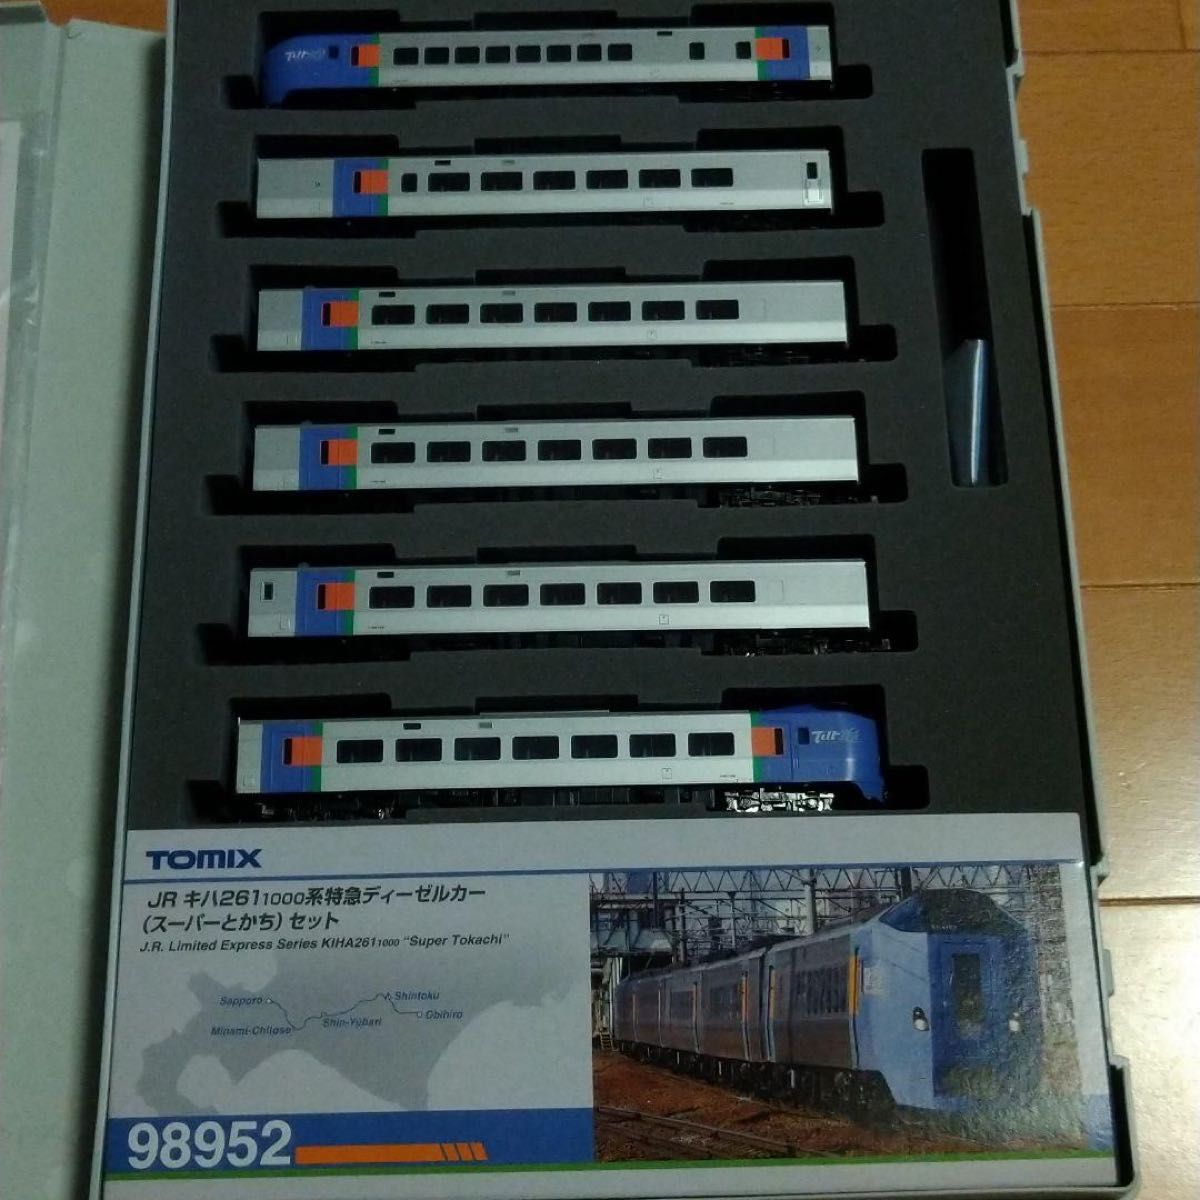 TOMIX Nゲージ 98952 〈限定〉キハ261 1000系特急ディーゼルカー (スーパーとかち)セット (6両) 鉄道模型